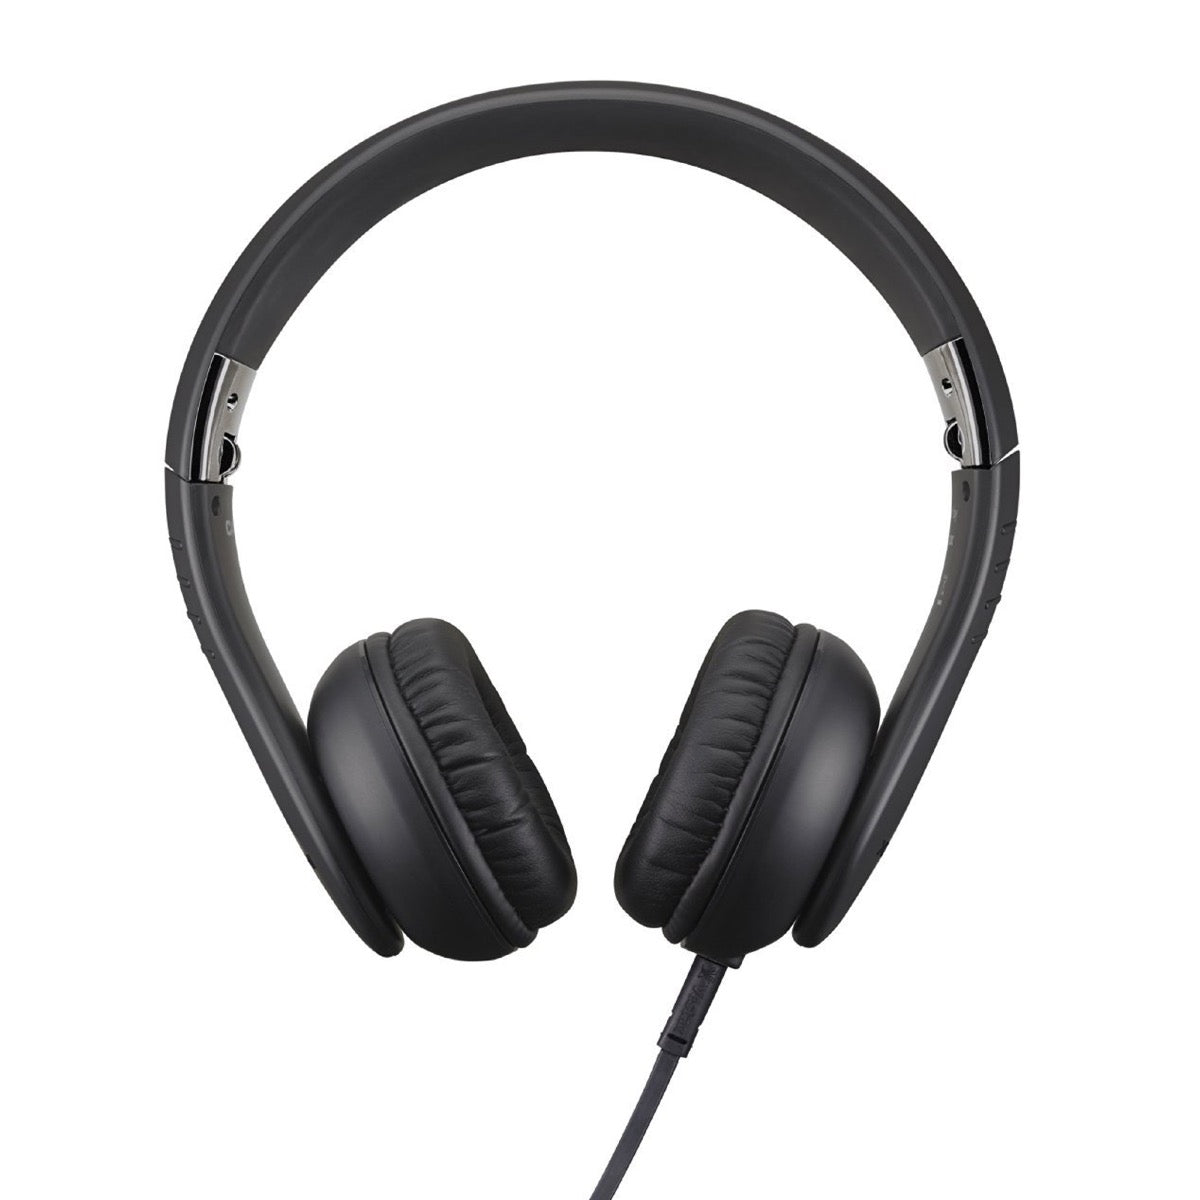 Casio XW-H1 Over Ear Headphones - Black